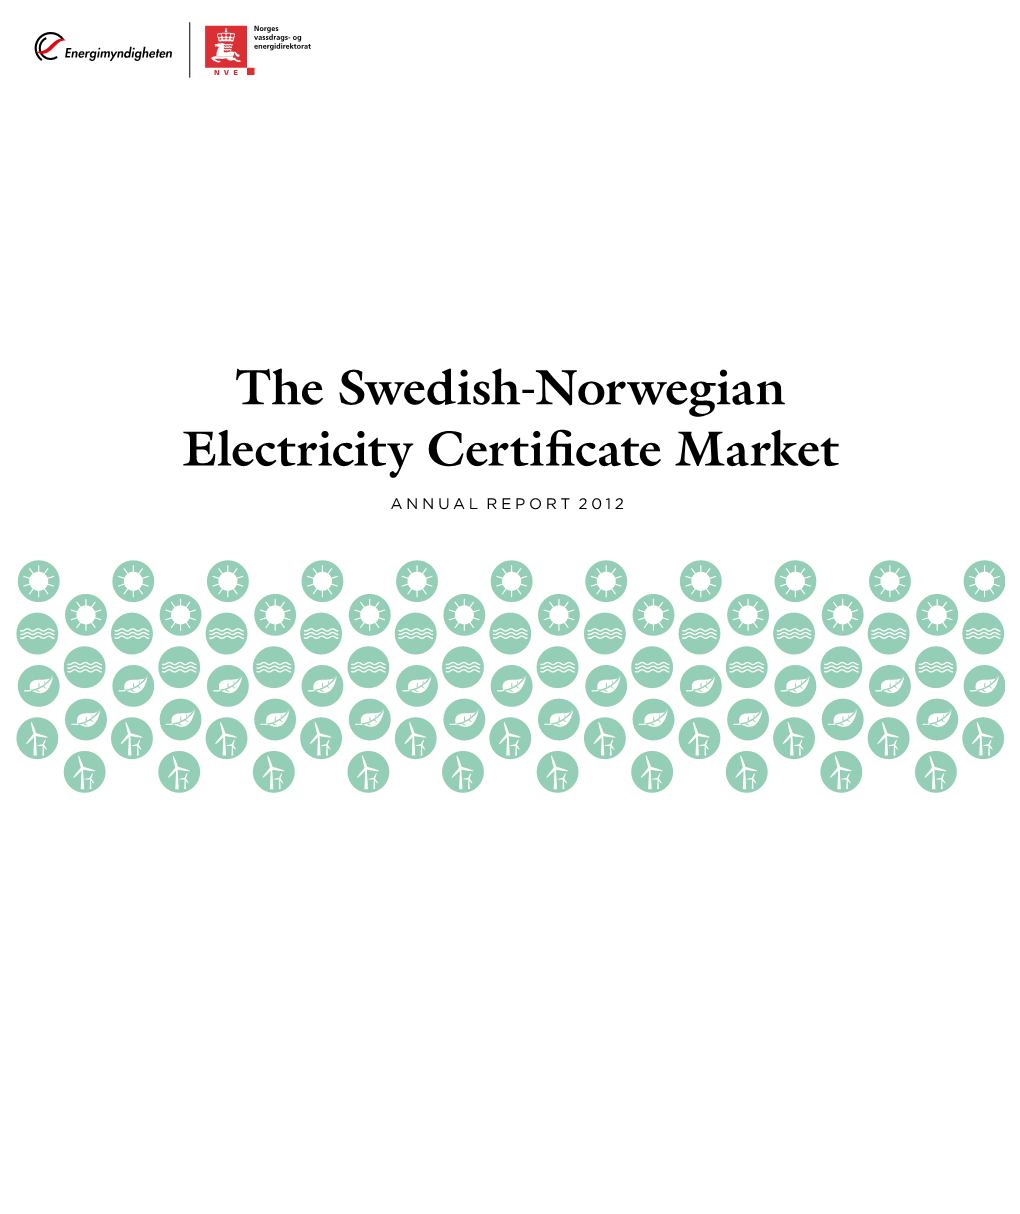 The Swedish-Norwegian Electricity Certificate Market